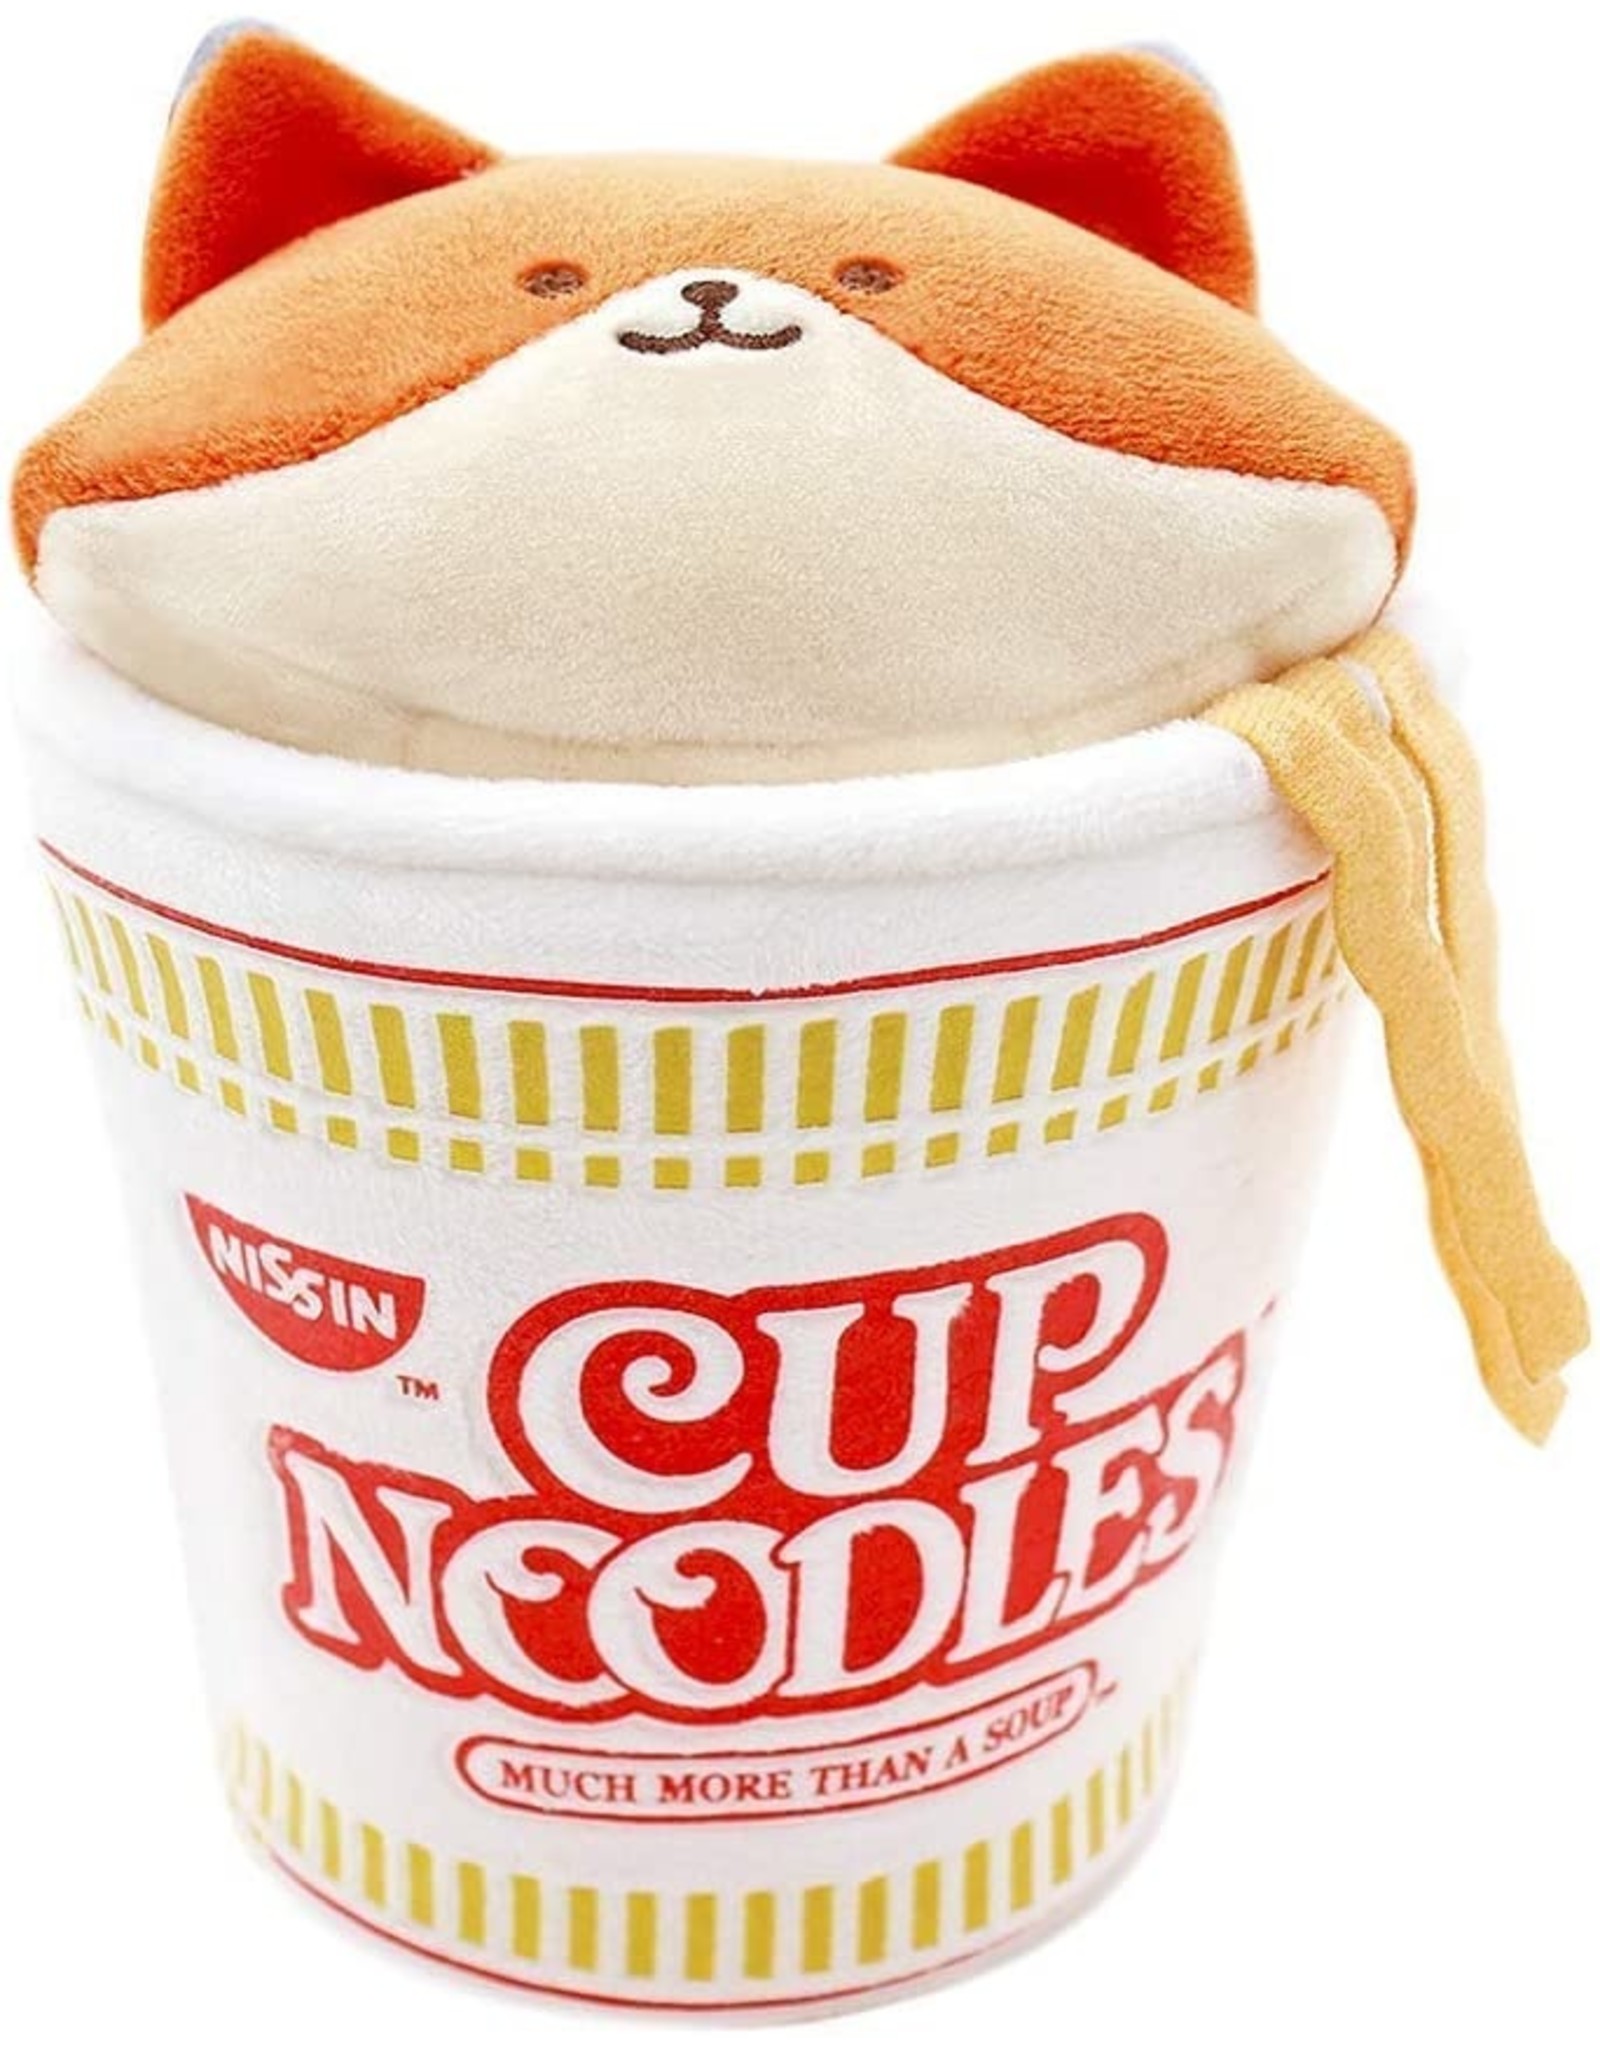 Anirollz x Cup Noodles Foxiroll Blanket Plush Small